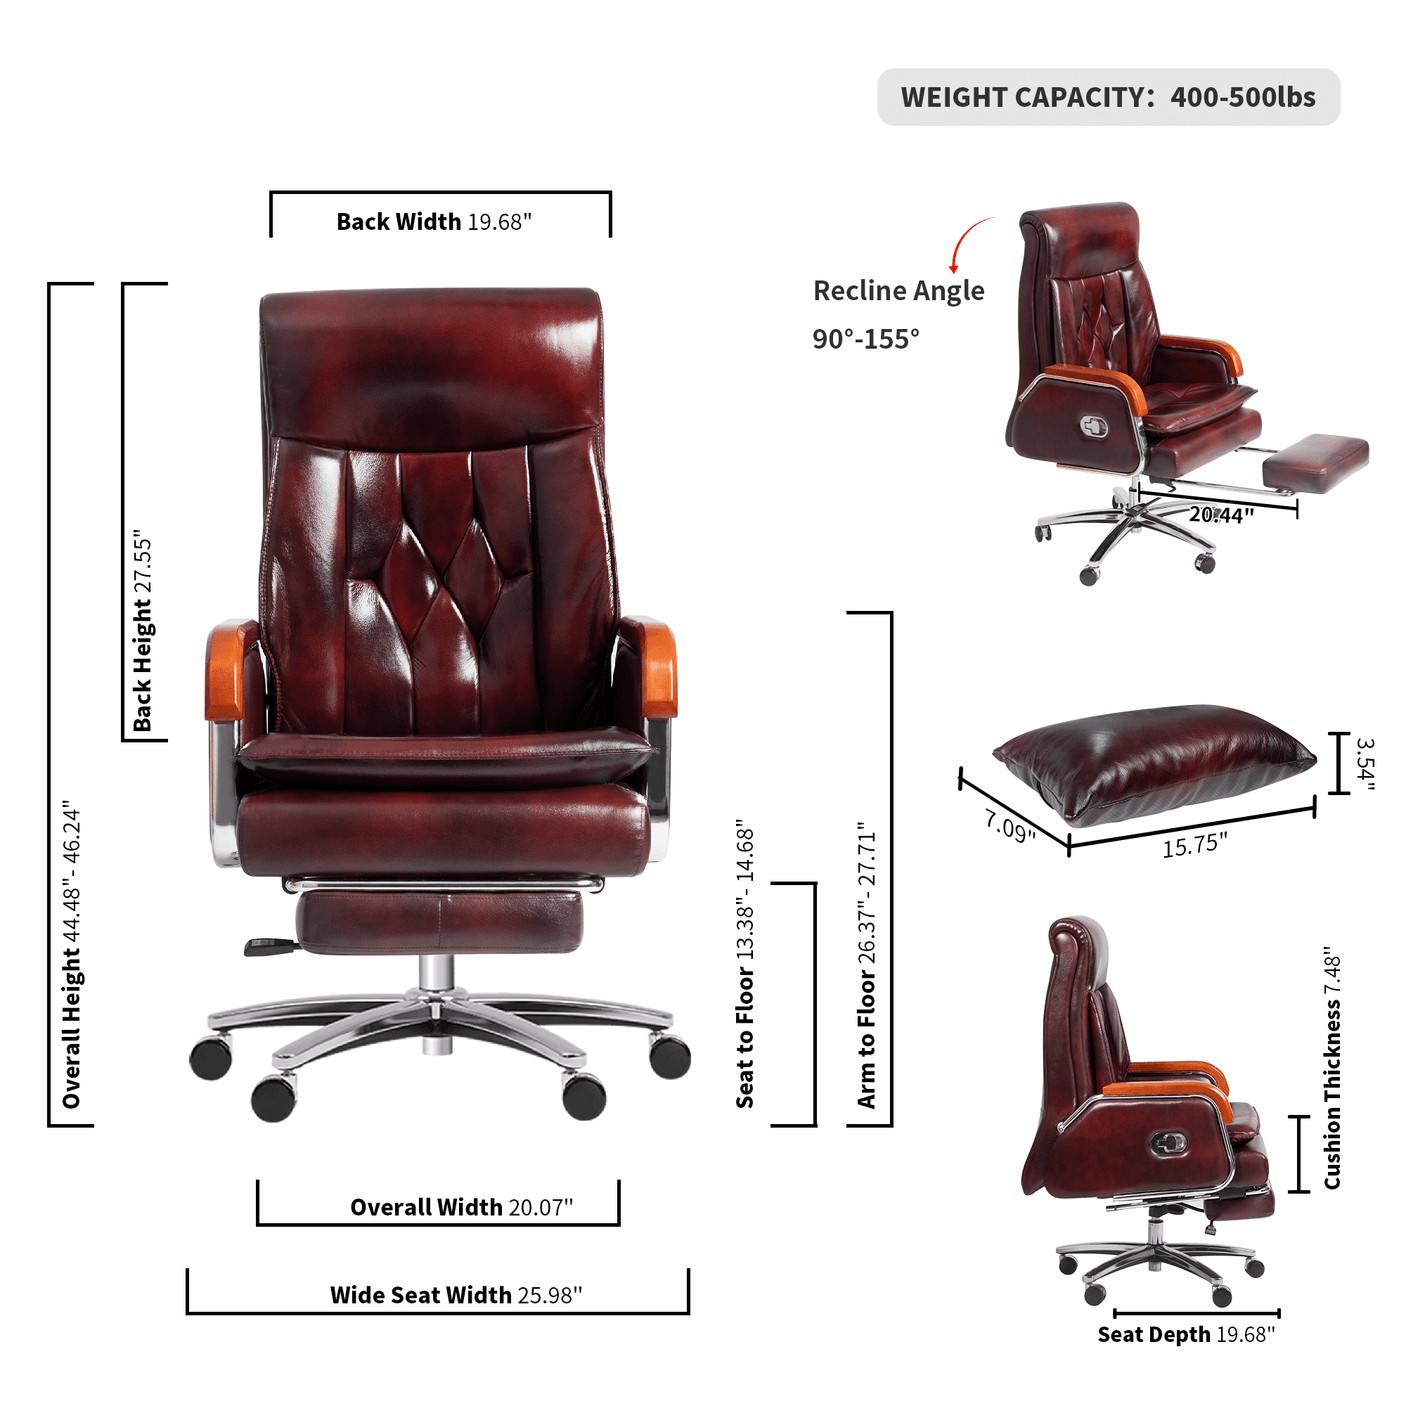 Cameron Massage Office Chair - sunflower - dimension